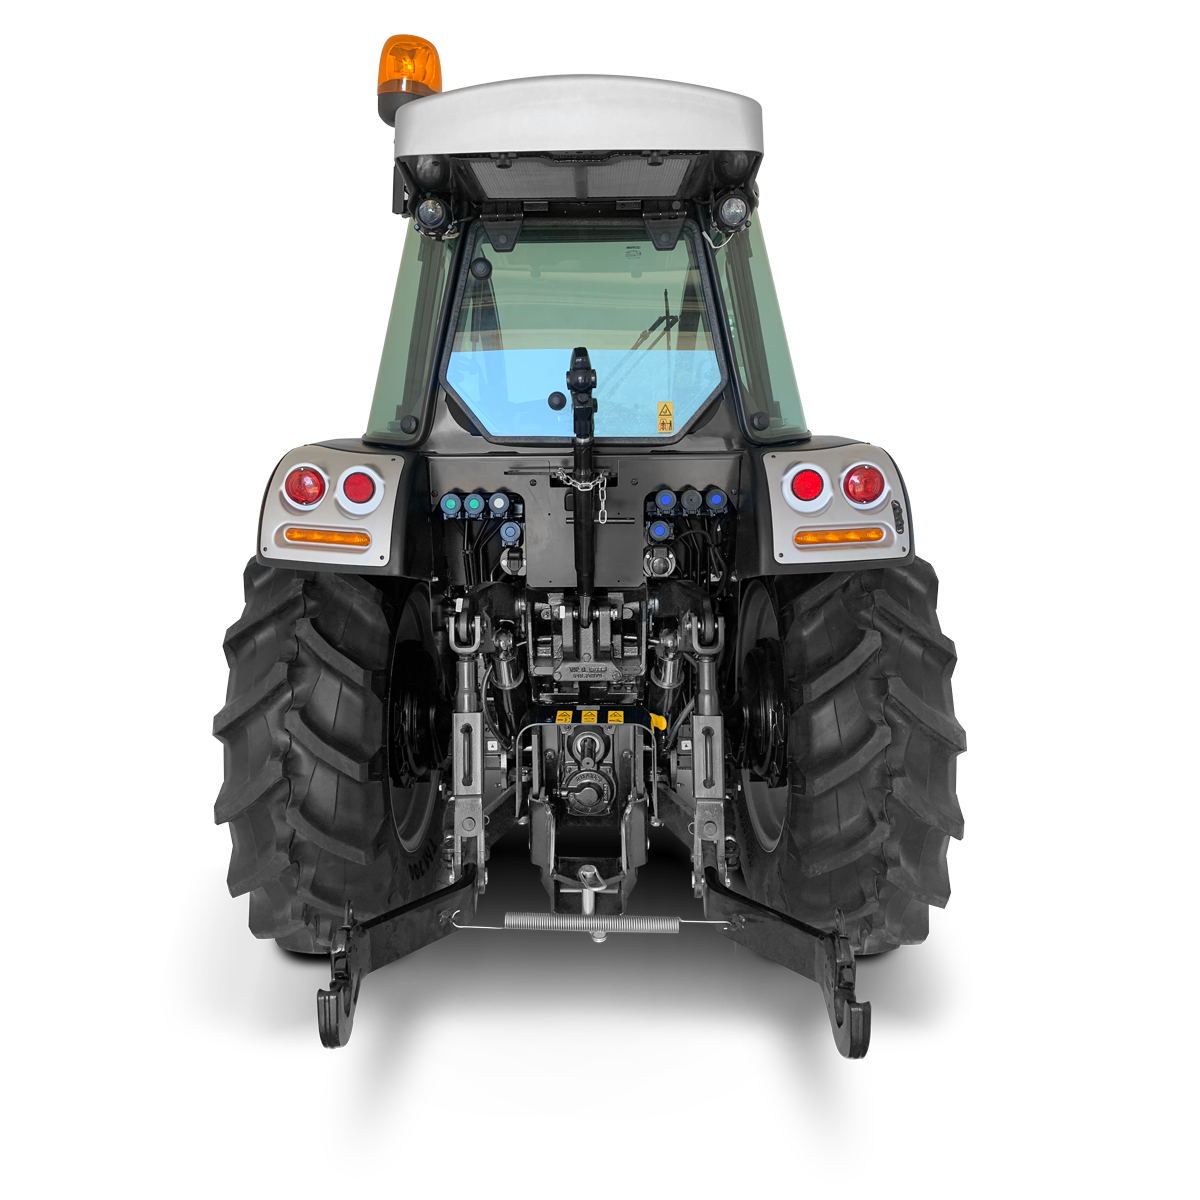 Toma de fuerza e hidráulica - Volcan L80 SDT DS - Tractor BCS Agrícola